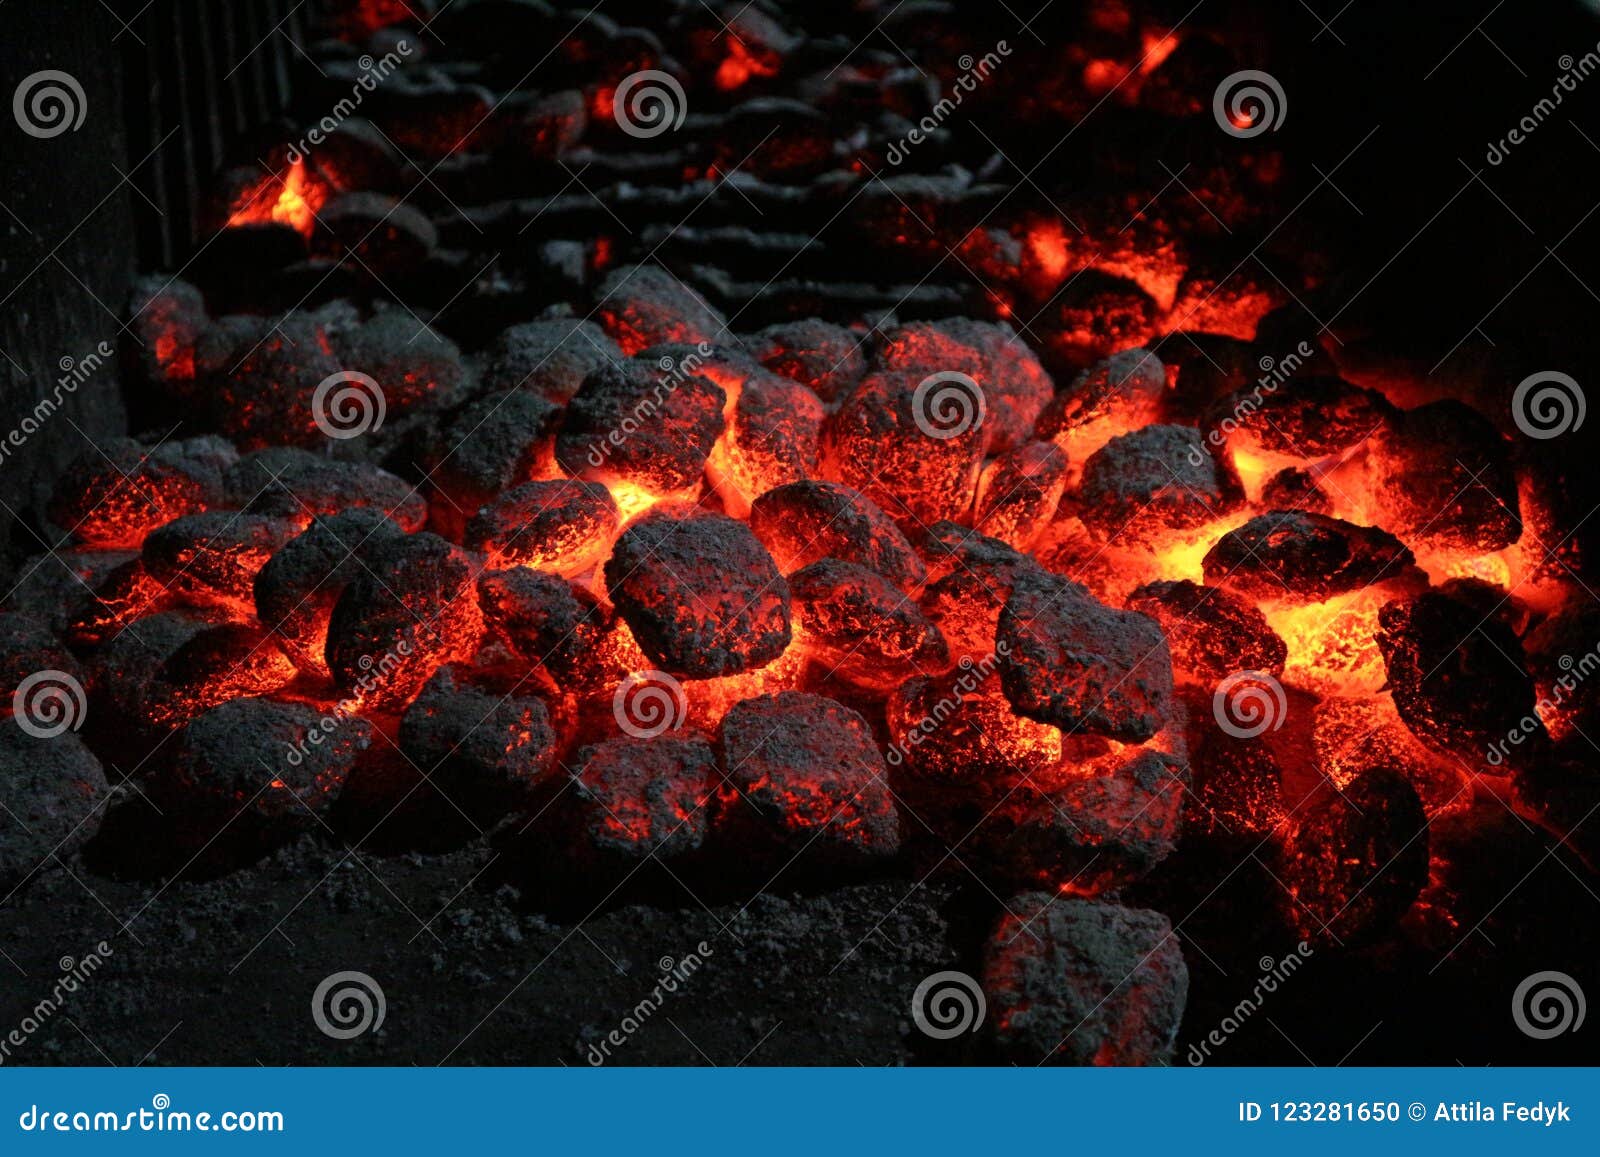 Red Hot Coals for Grilling. Stock Photo - Image of bulgari, dark: 123281650